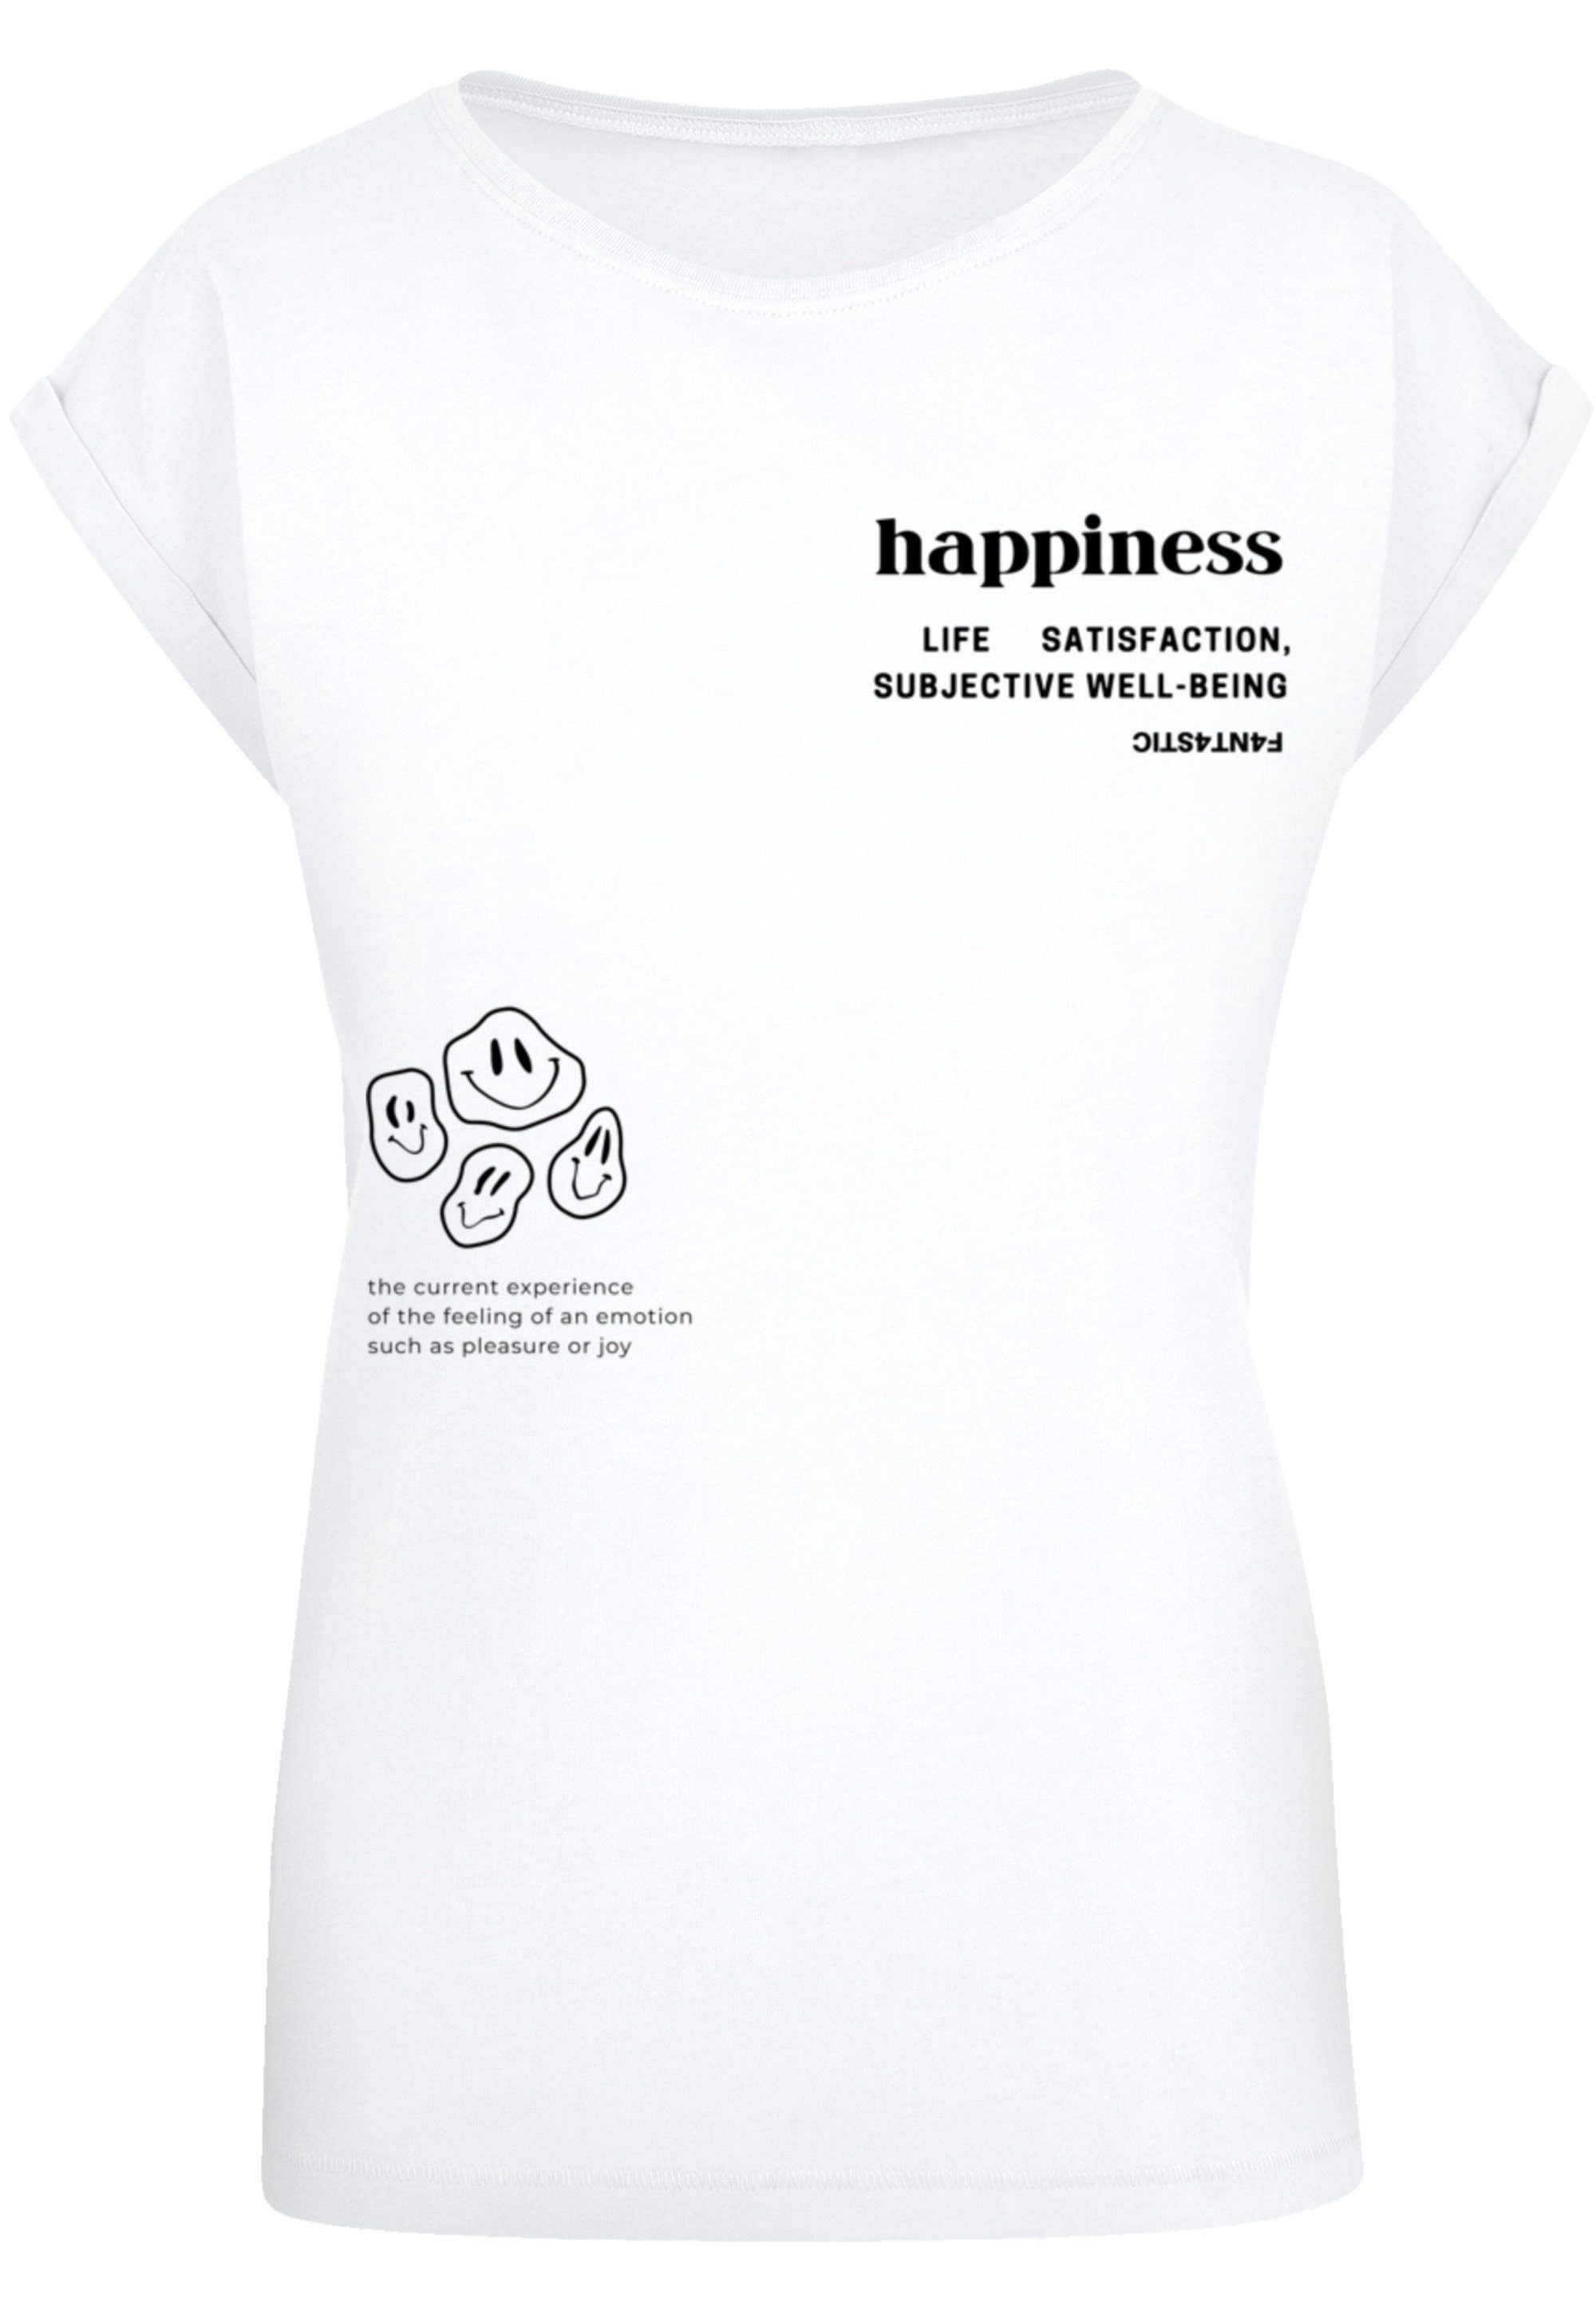 PLUS Tag F4NT4STIC T-Shirt happiness SIZE für Lässiges jeden Basic-Piece Print,